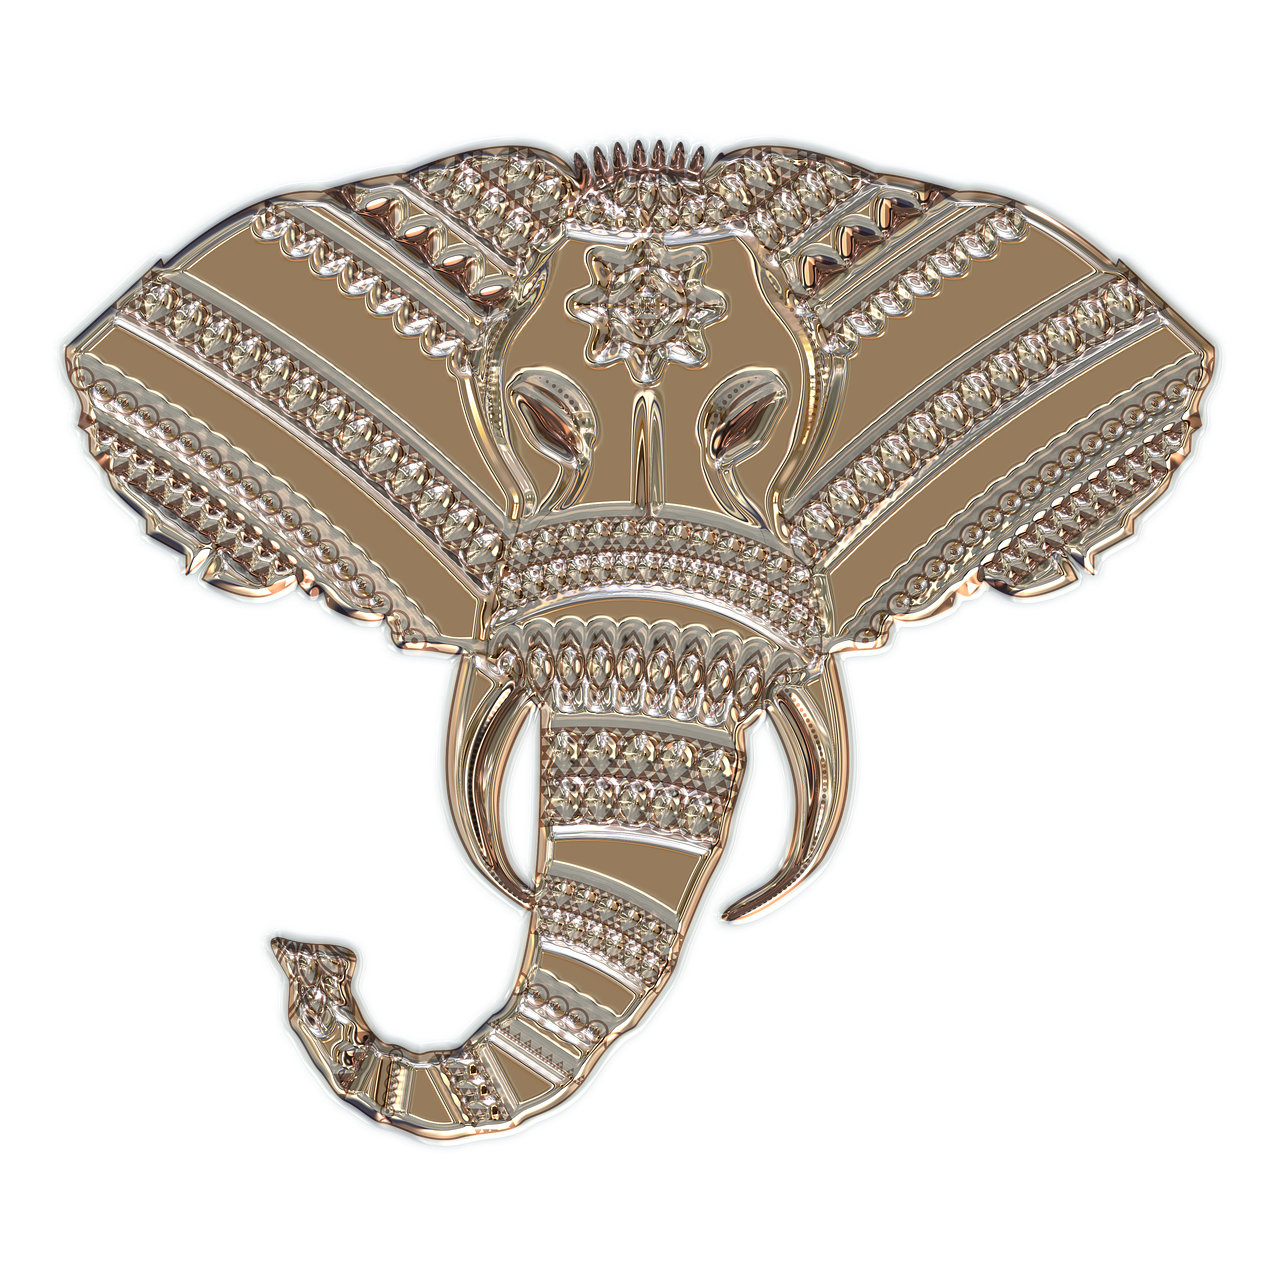 Elephant head,metallizer,art,glass,factory - free image from needpix.com